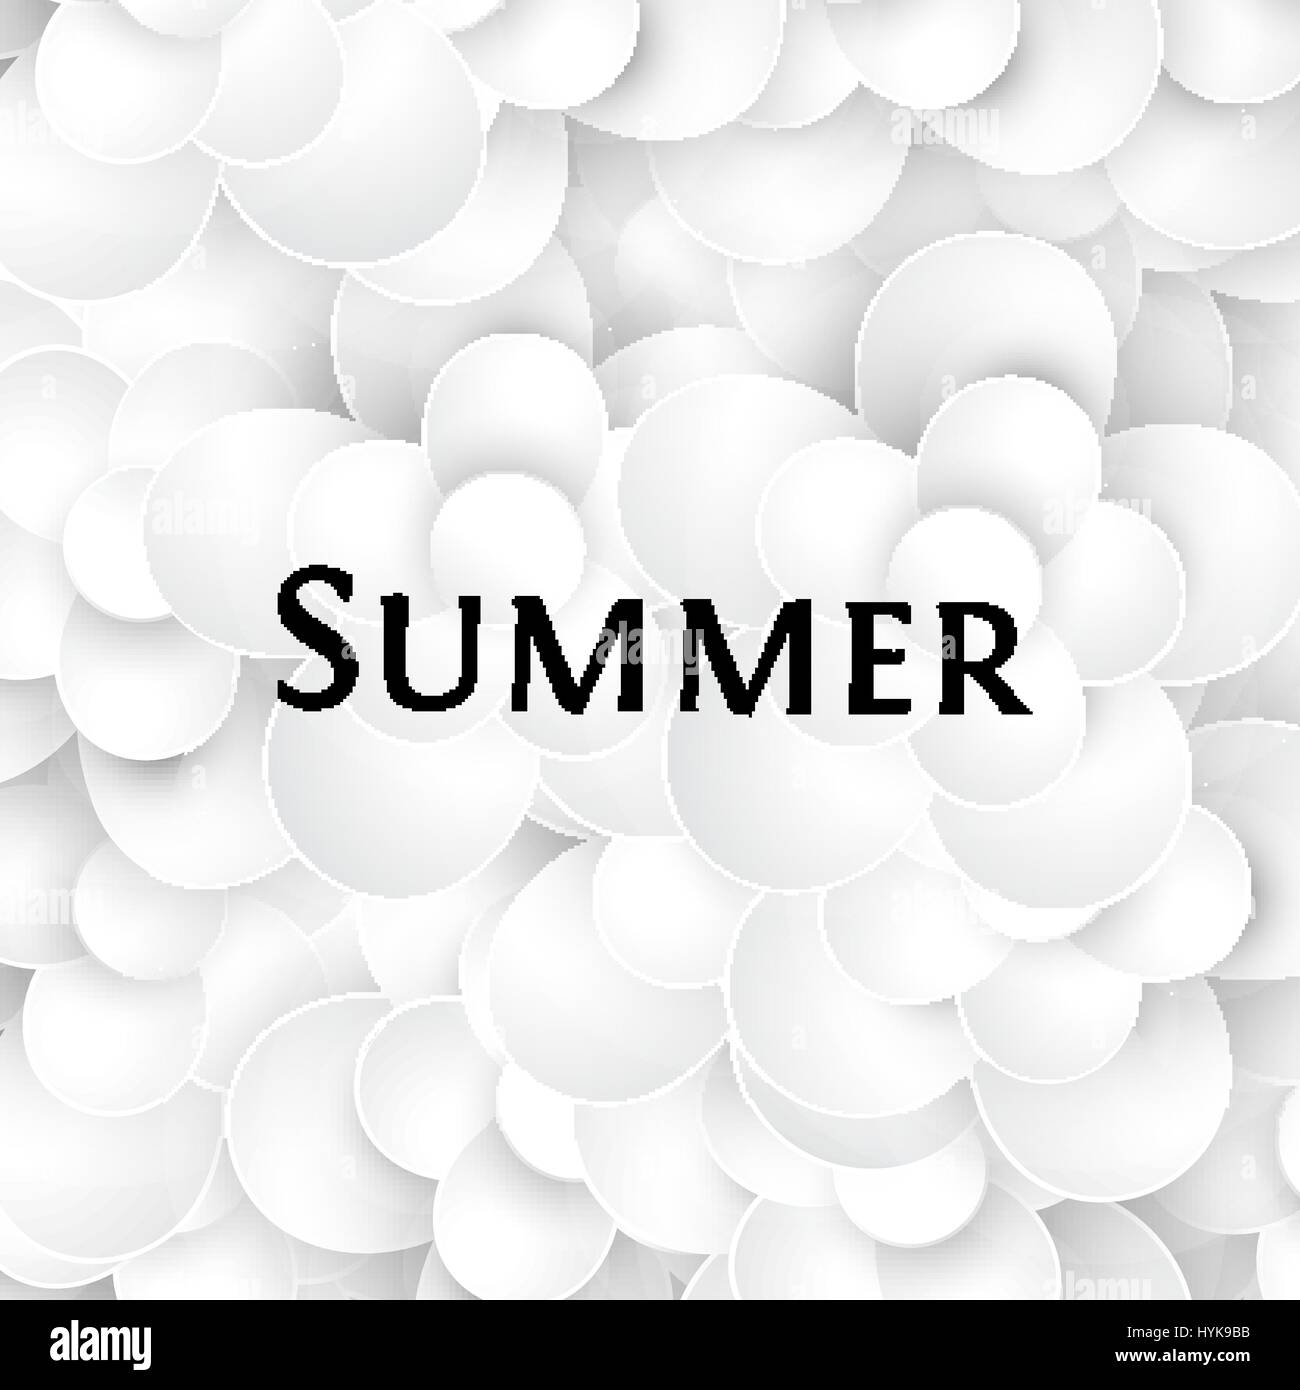 Isolierte abstrakte Kunst Stil weiße Farbe Blumen nahtlose Papierstruktur, florale Muster mit Wort-Sommer-Vektor-illustration Stock Vektor